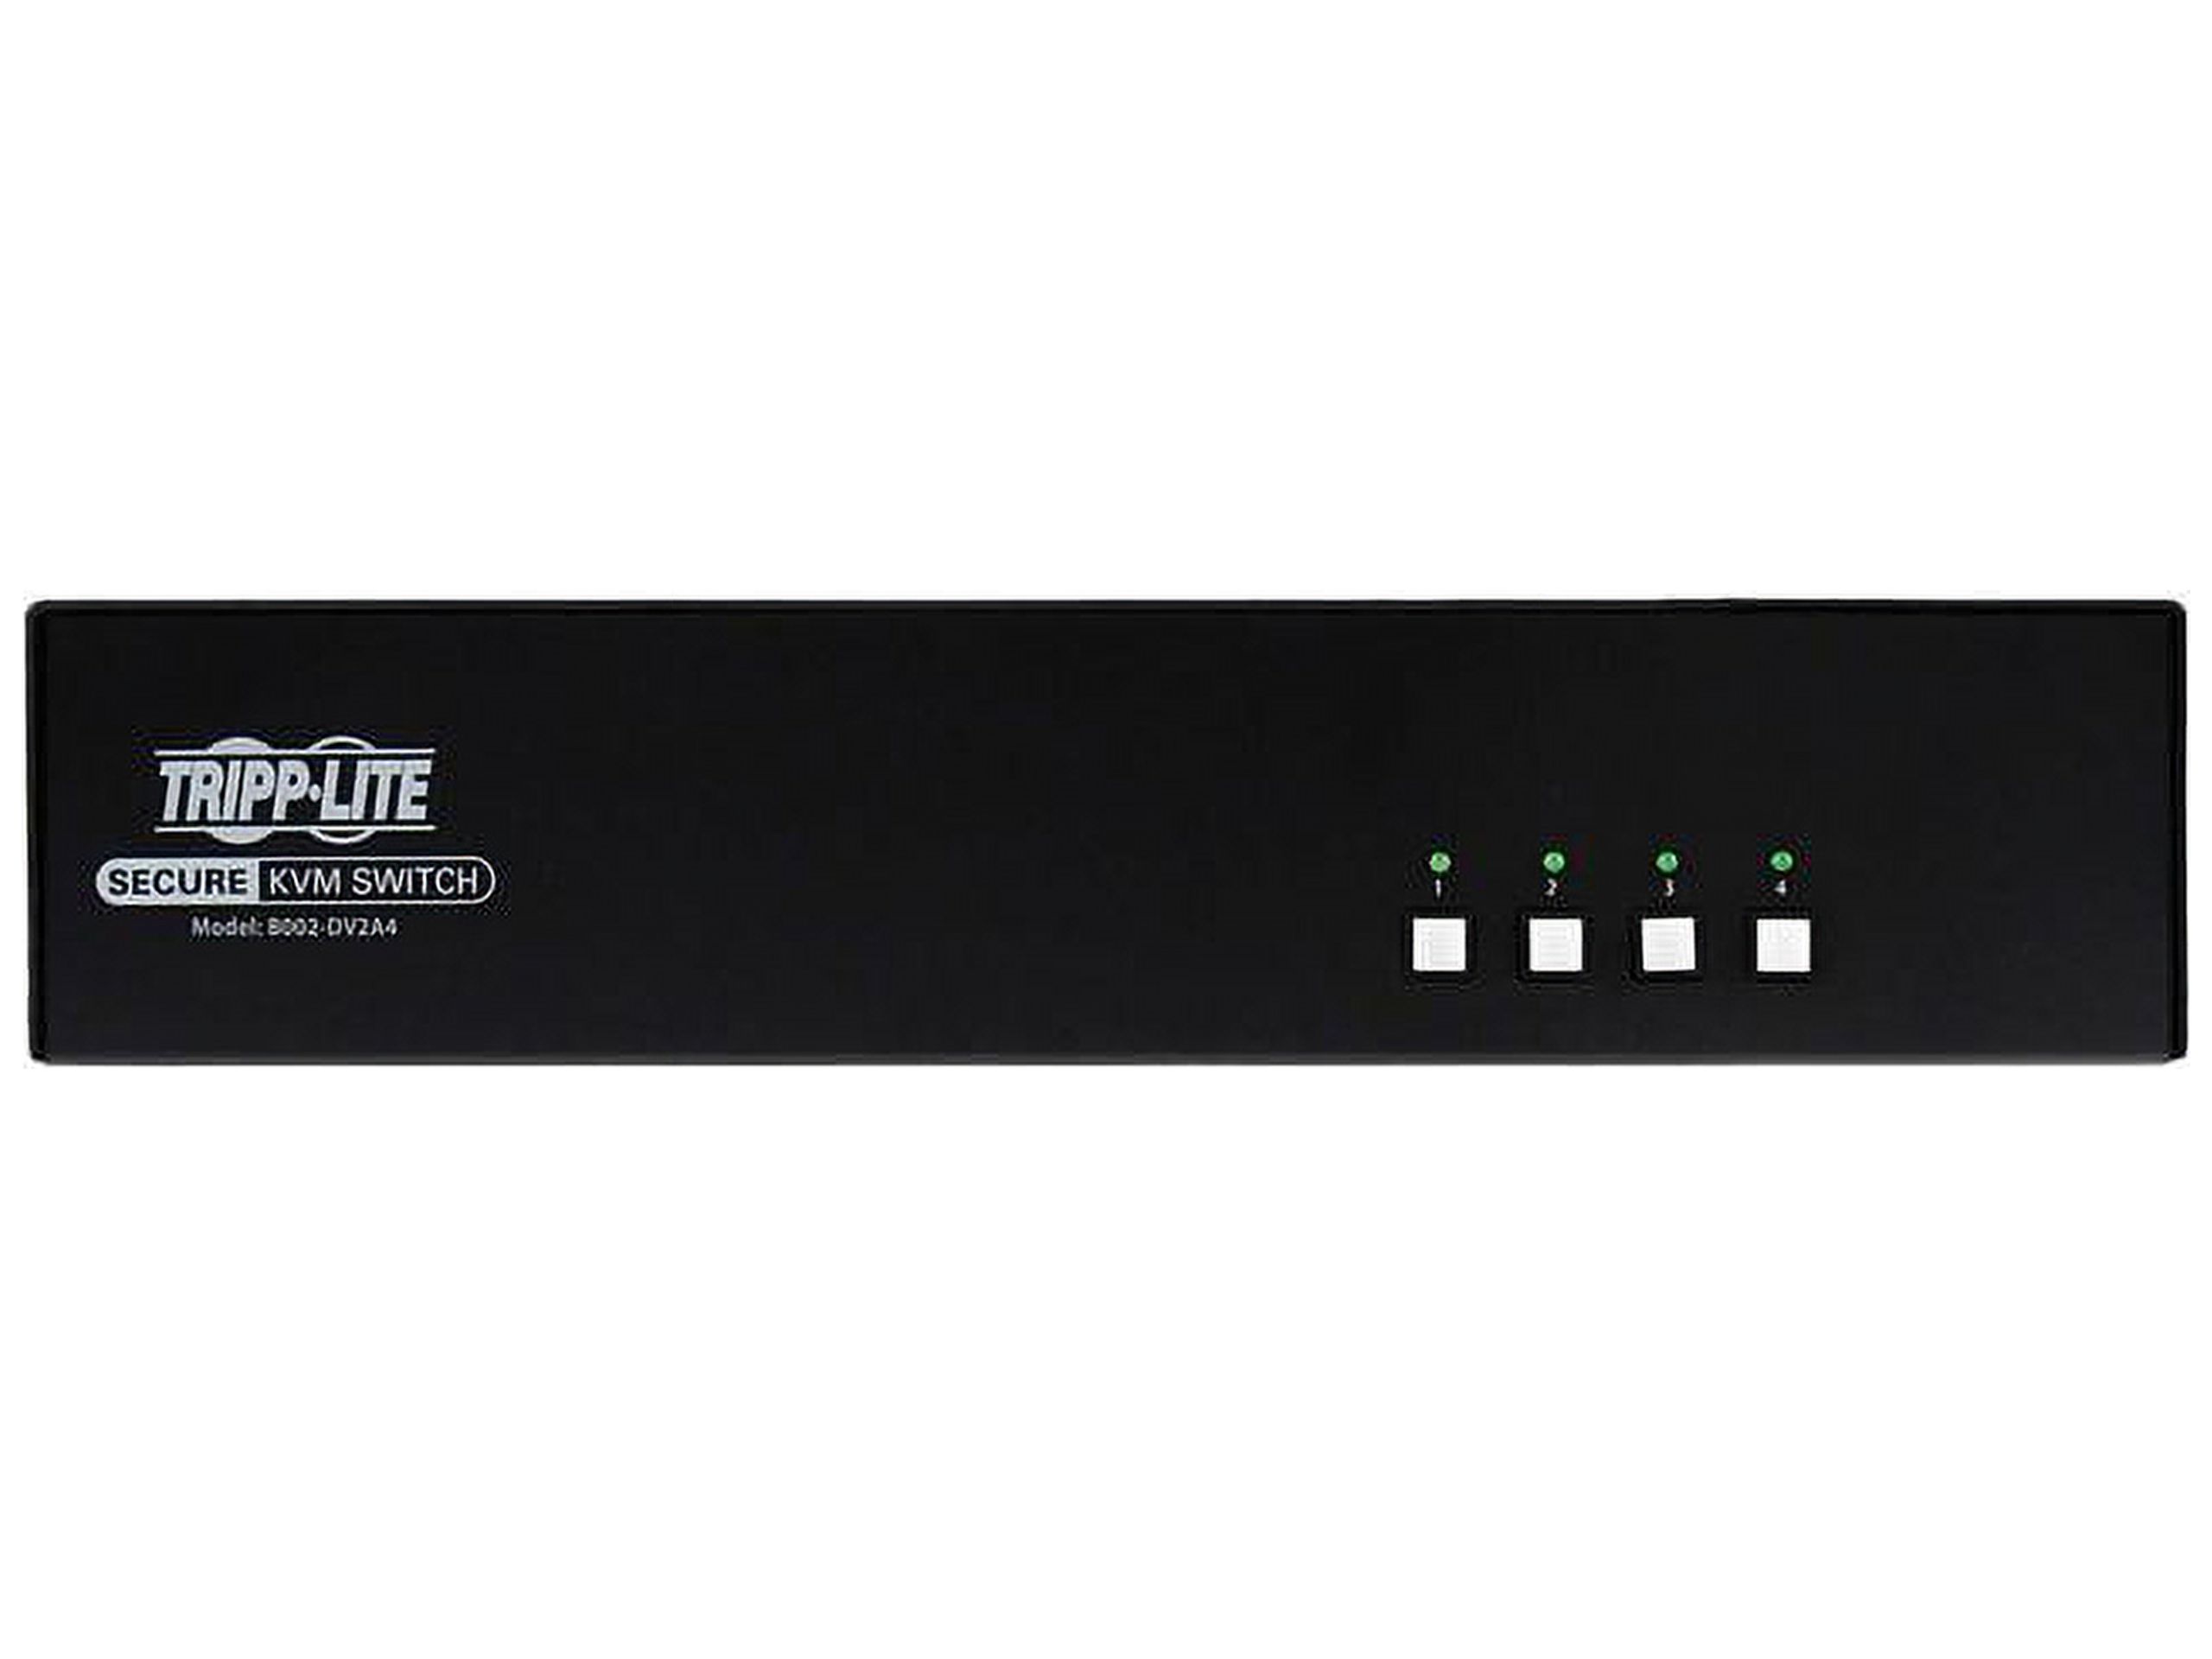 Tripp Lite 4 Port Secure KVM Switch, DVI to DVI, Dual Monitor, NIAP PP3.0 Certified, Audio, TAA-Compliant (B002-DV2A4) - image 1 of 4